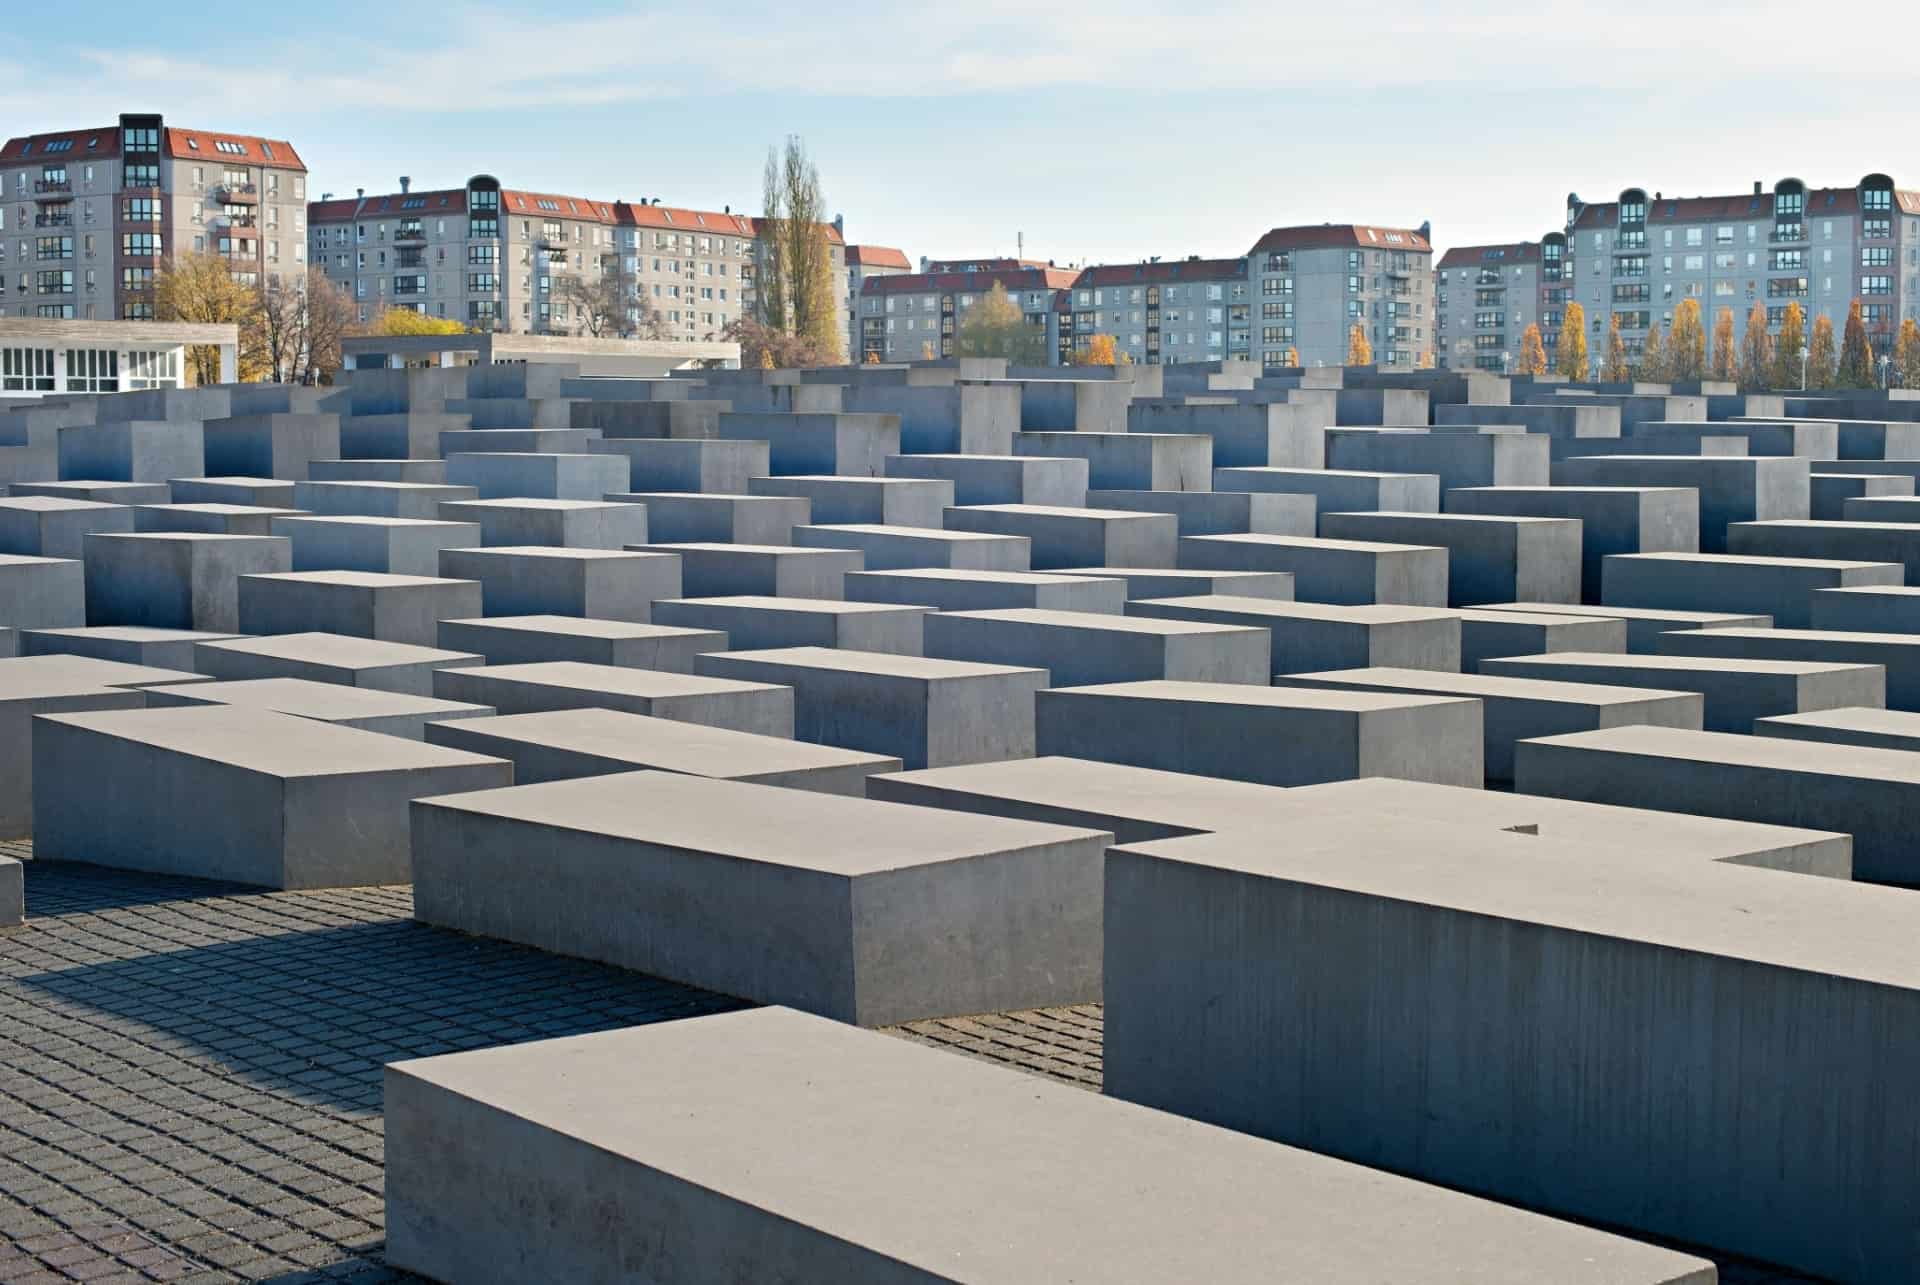 memorial holocauste berlin 5 jours